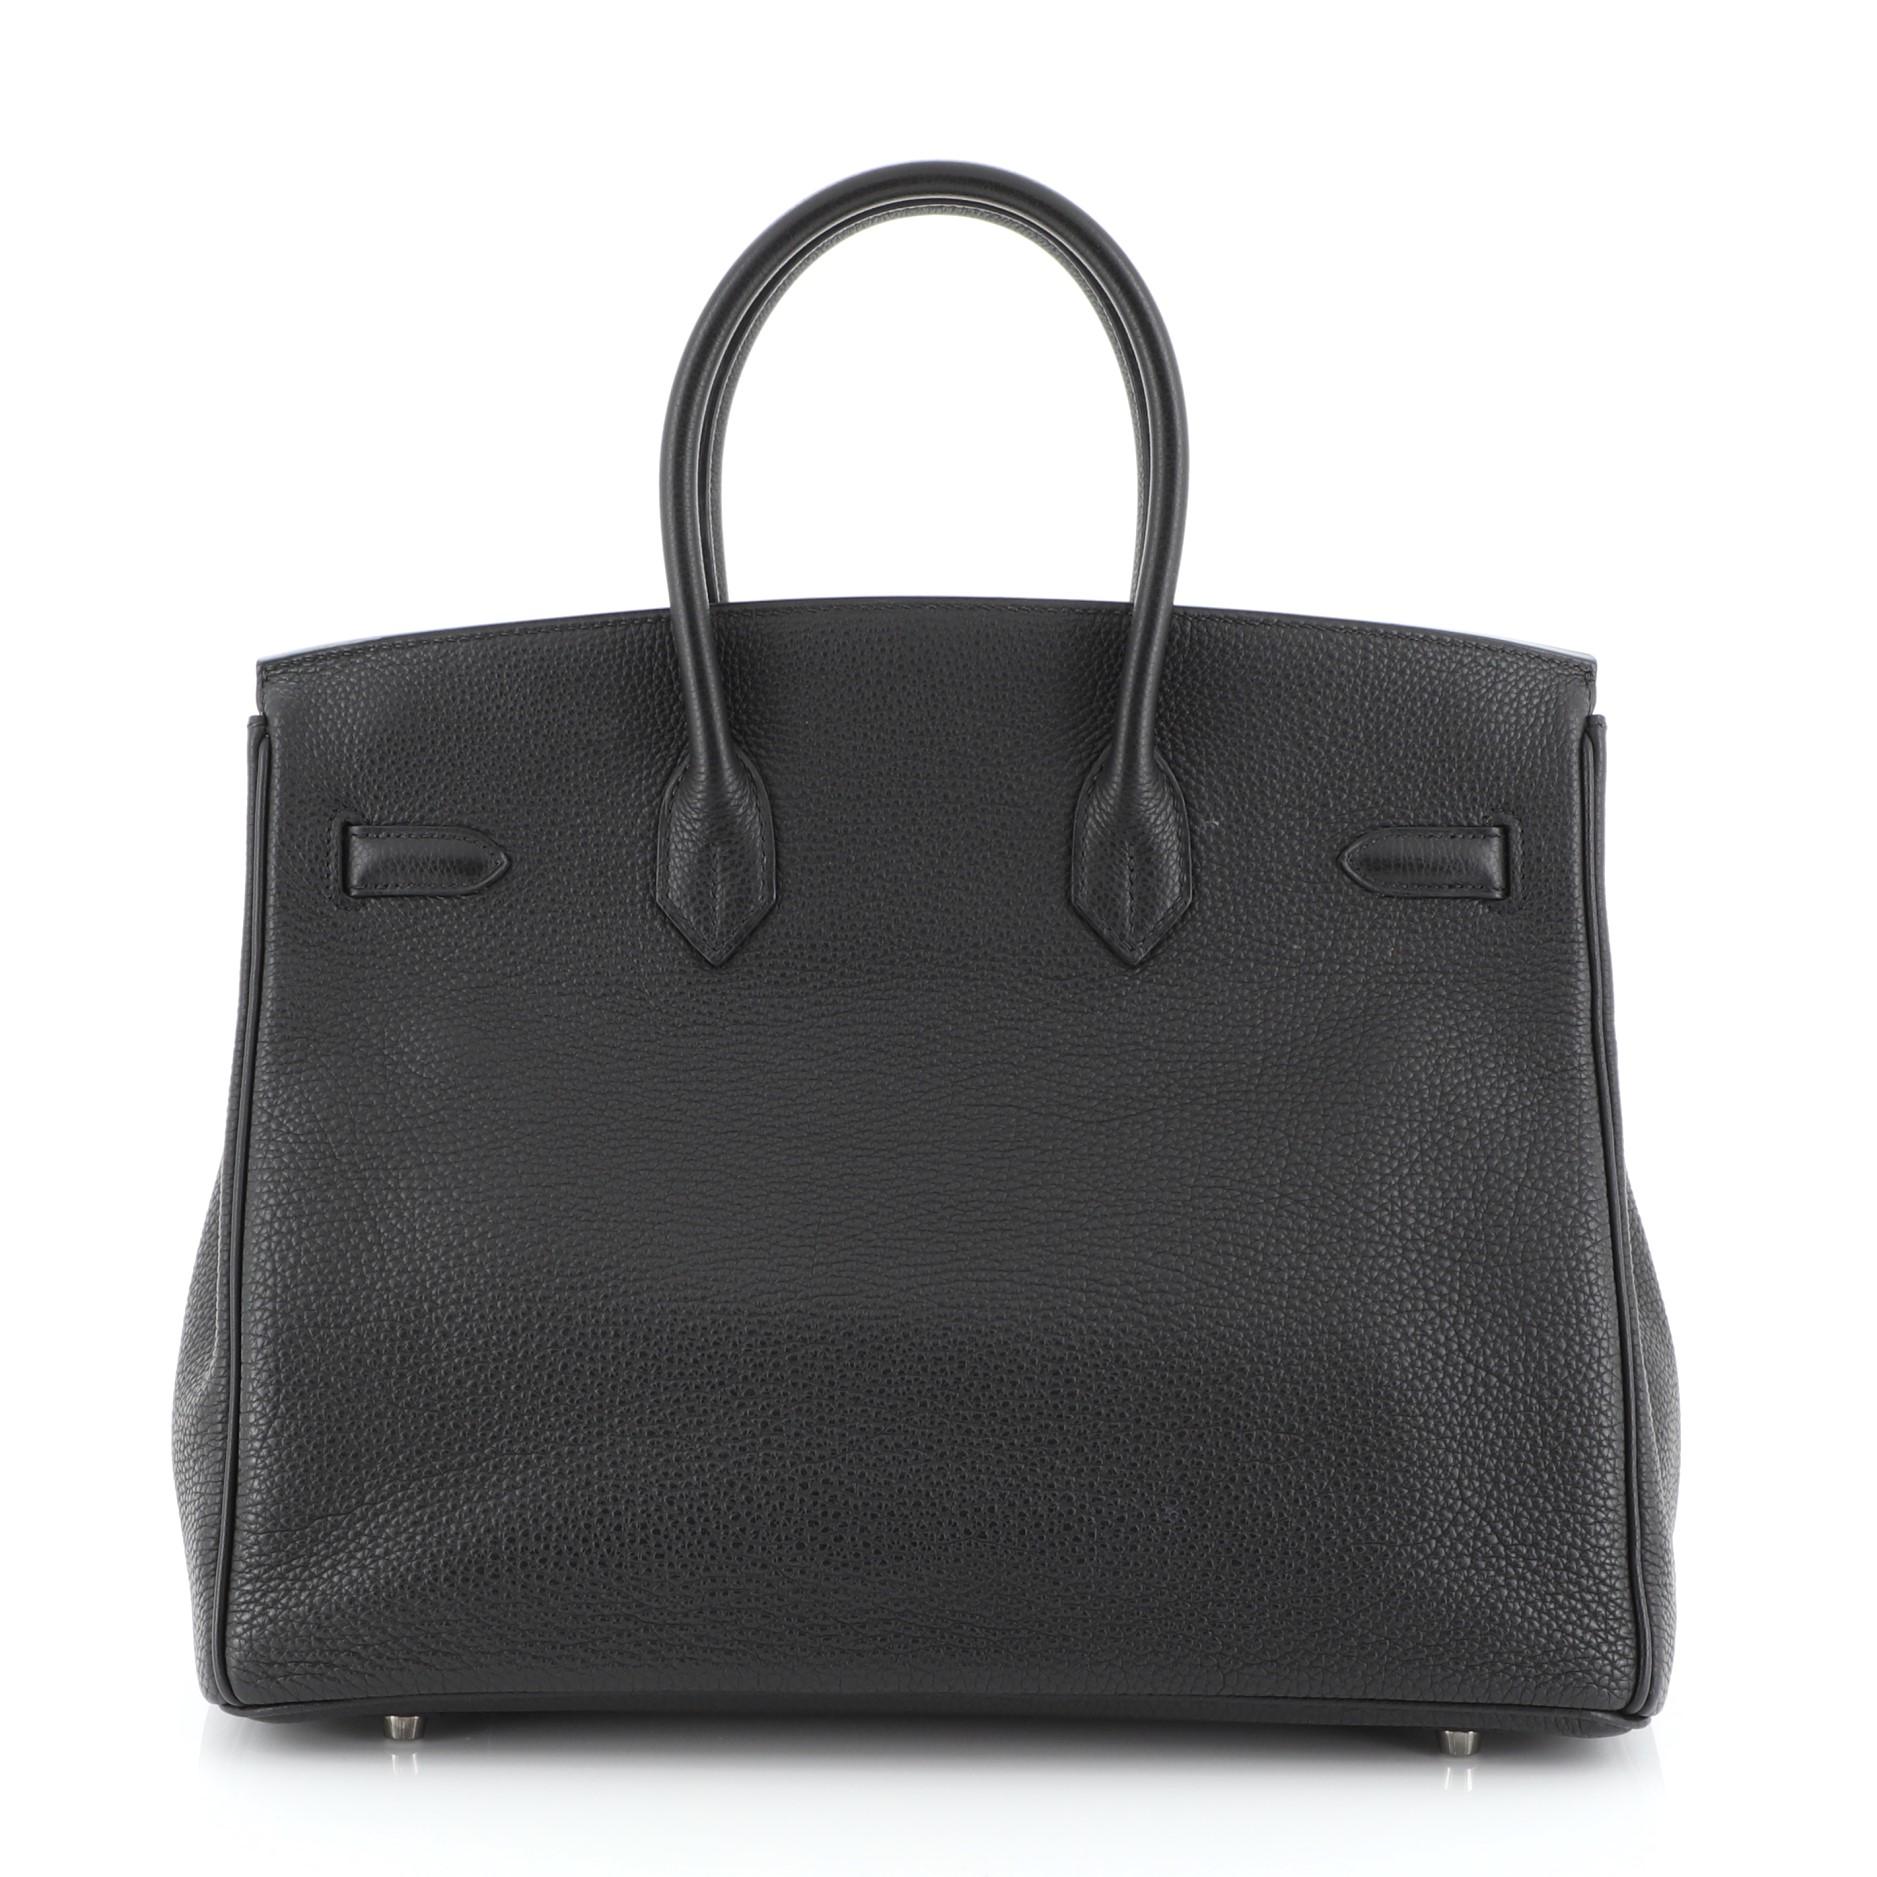 Black Hermes Birkin Handbag Noir Togo With Palladium Hardware 35 